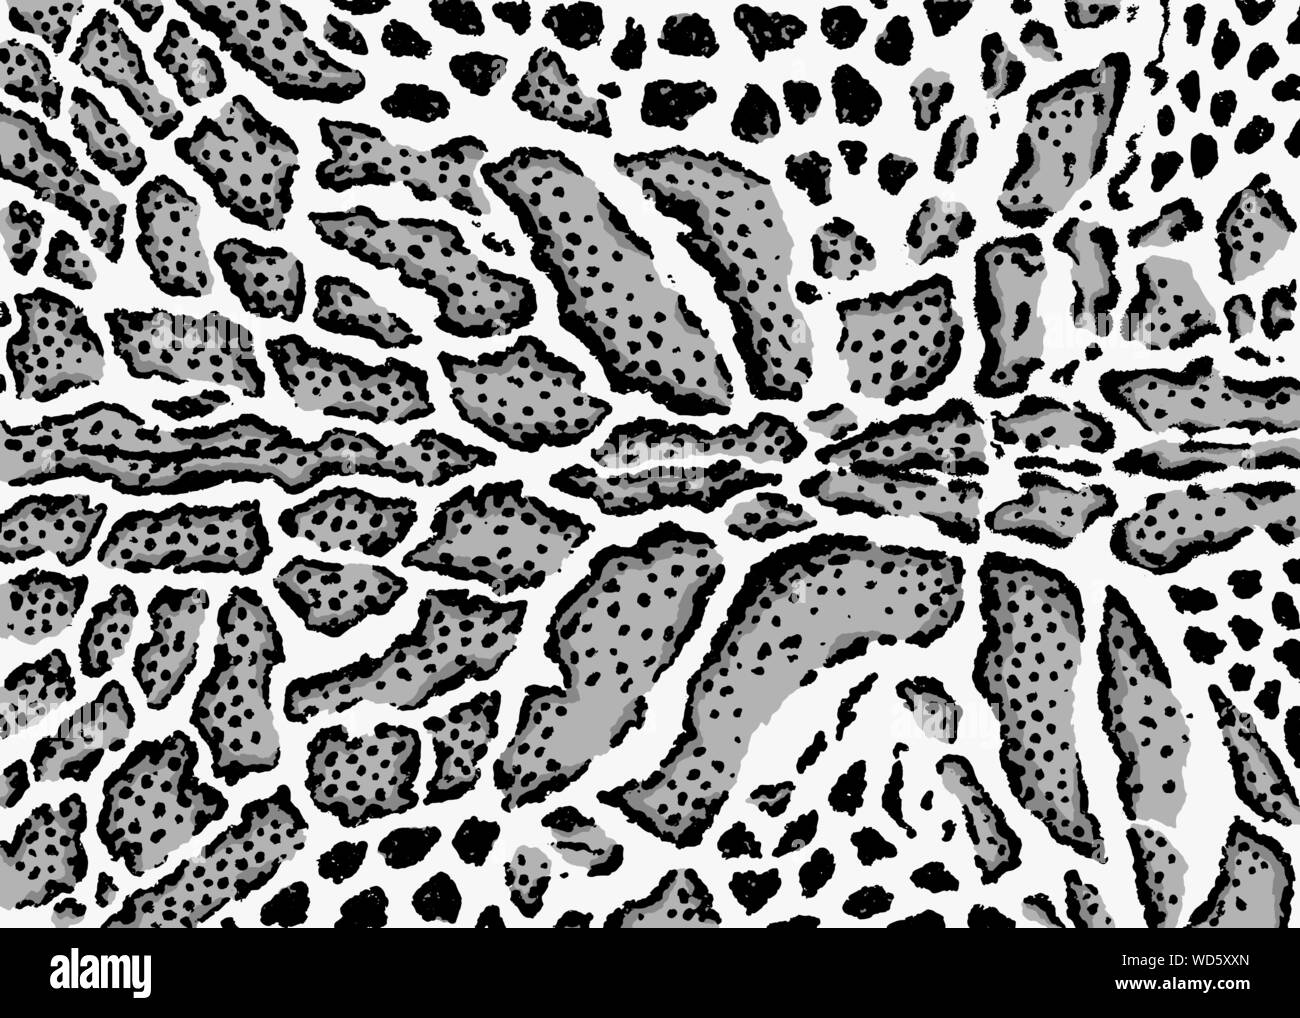 Clouded leopard skin pattern design. Leopard spots print vector illustration background. Wildlife fur skin design illustration for print, web, home de Stock Vector